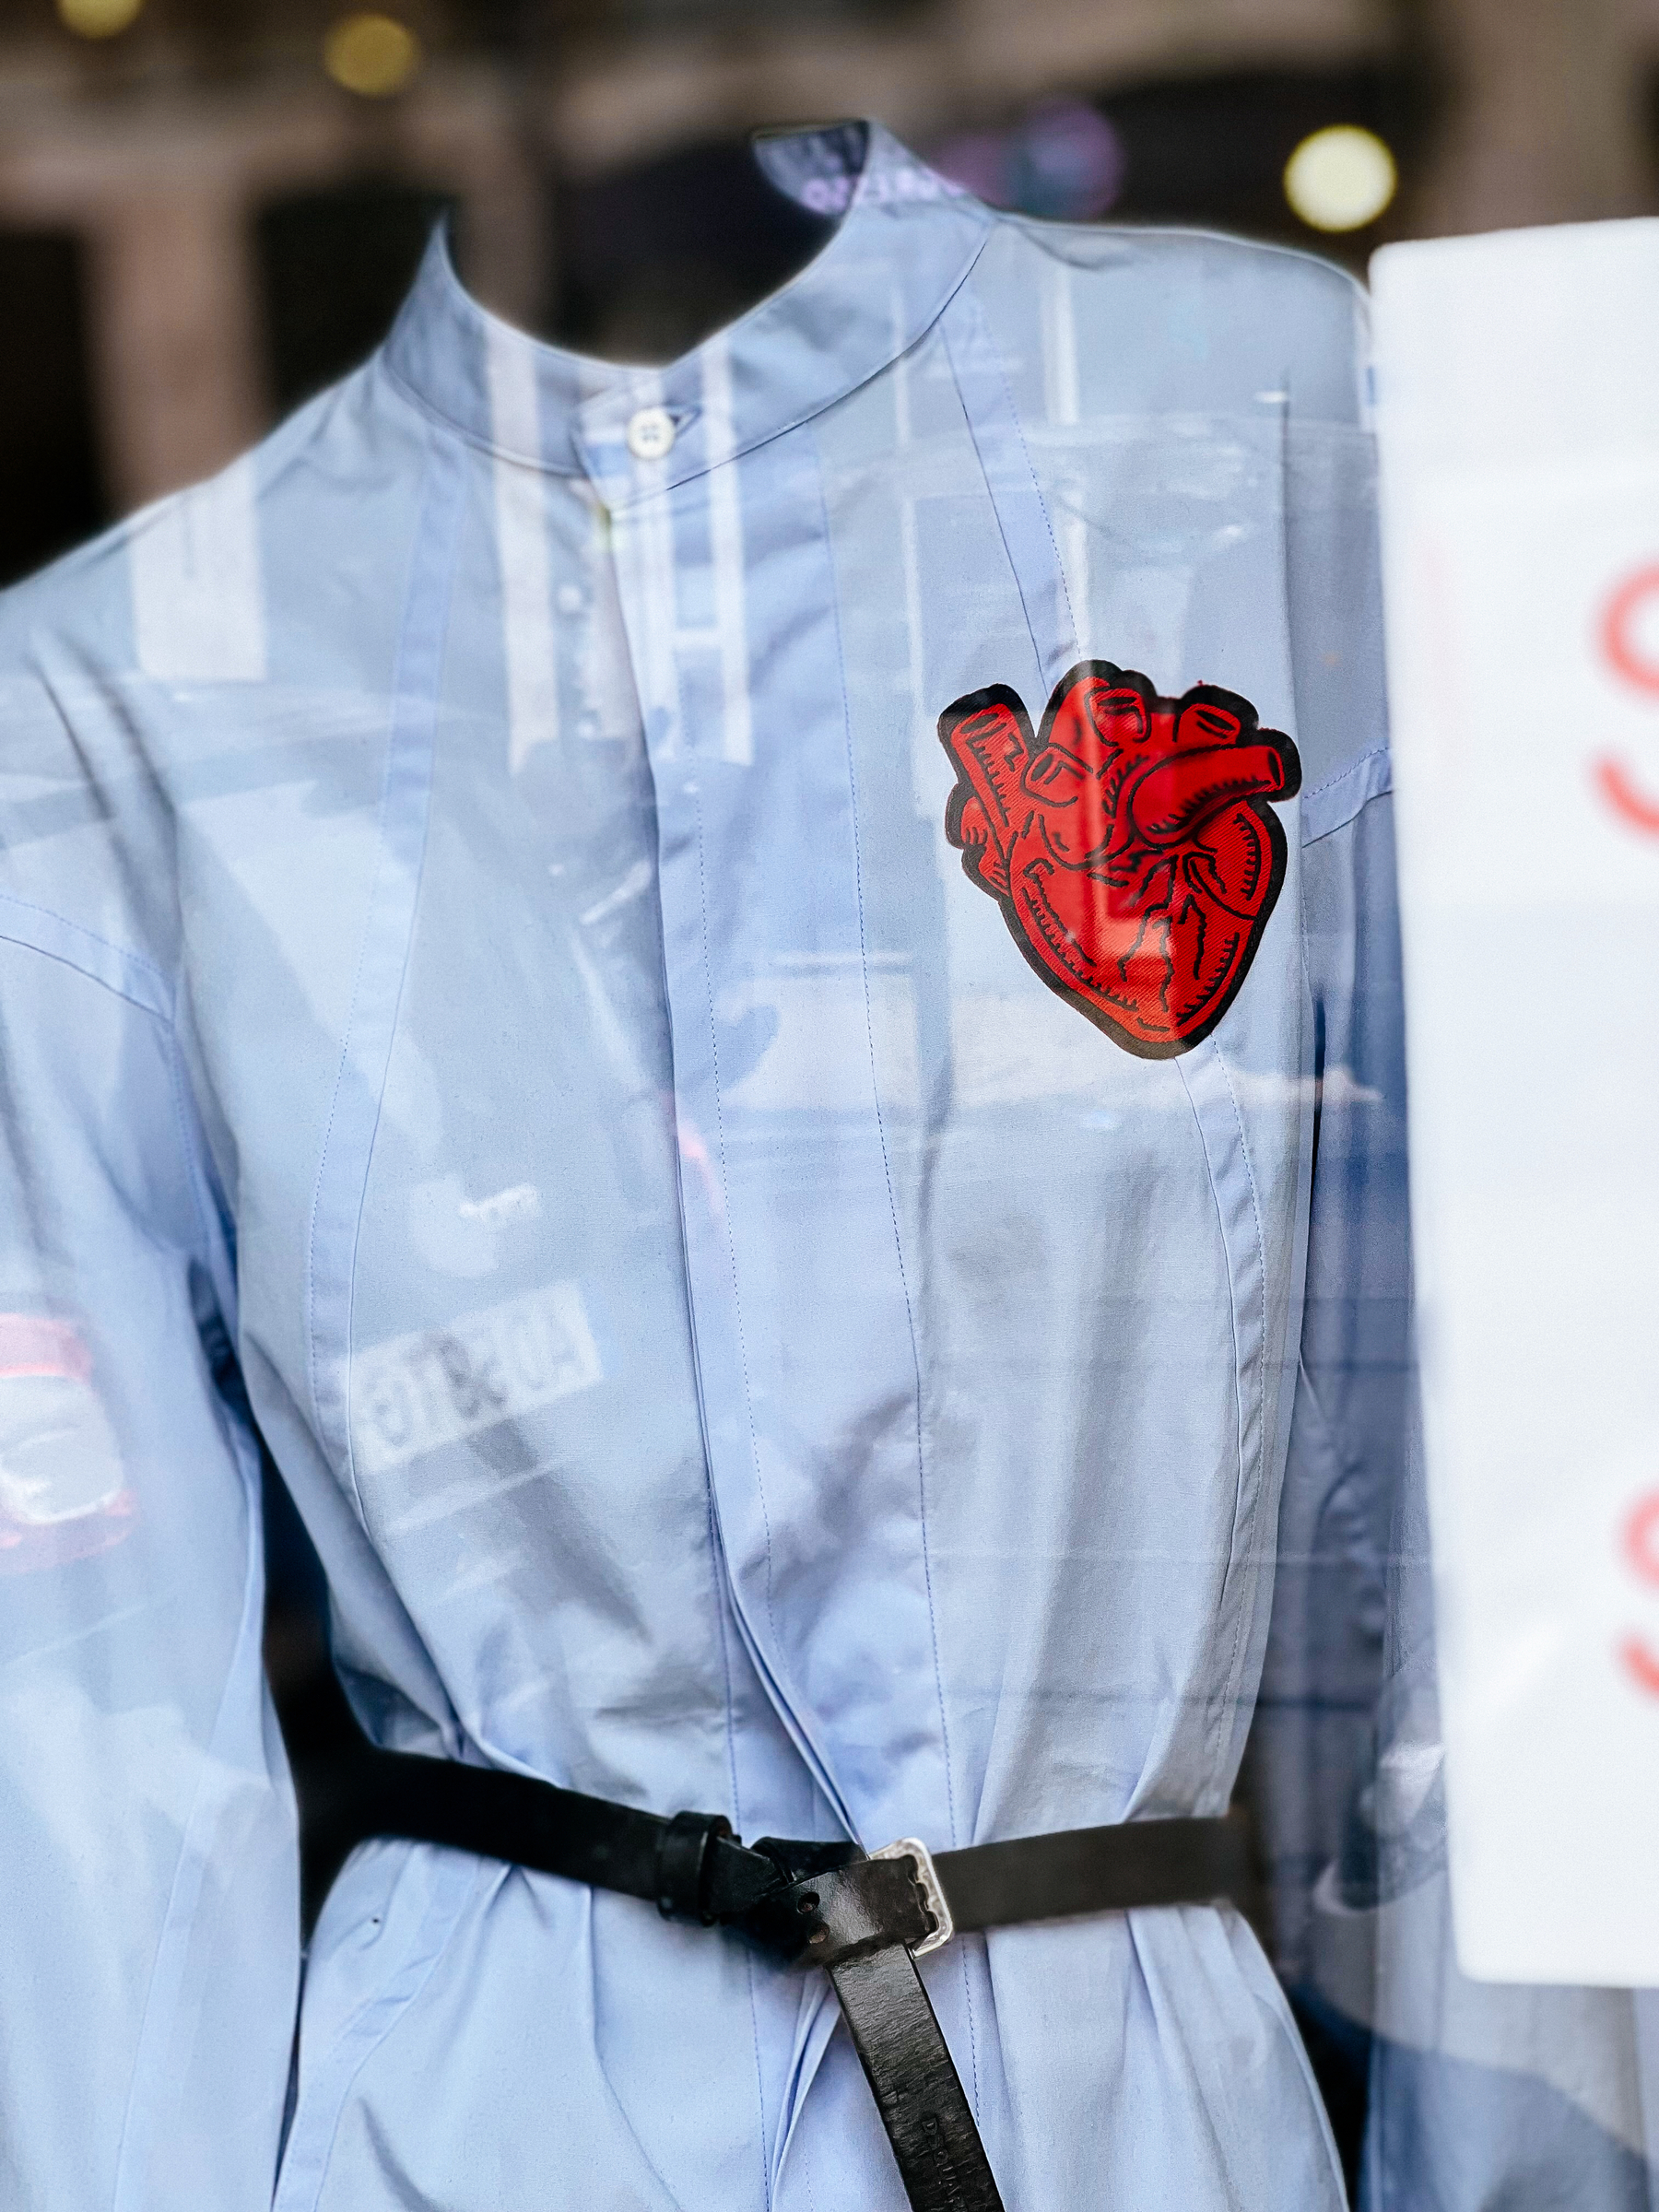 A shirt with a heart.